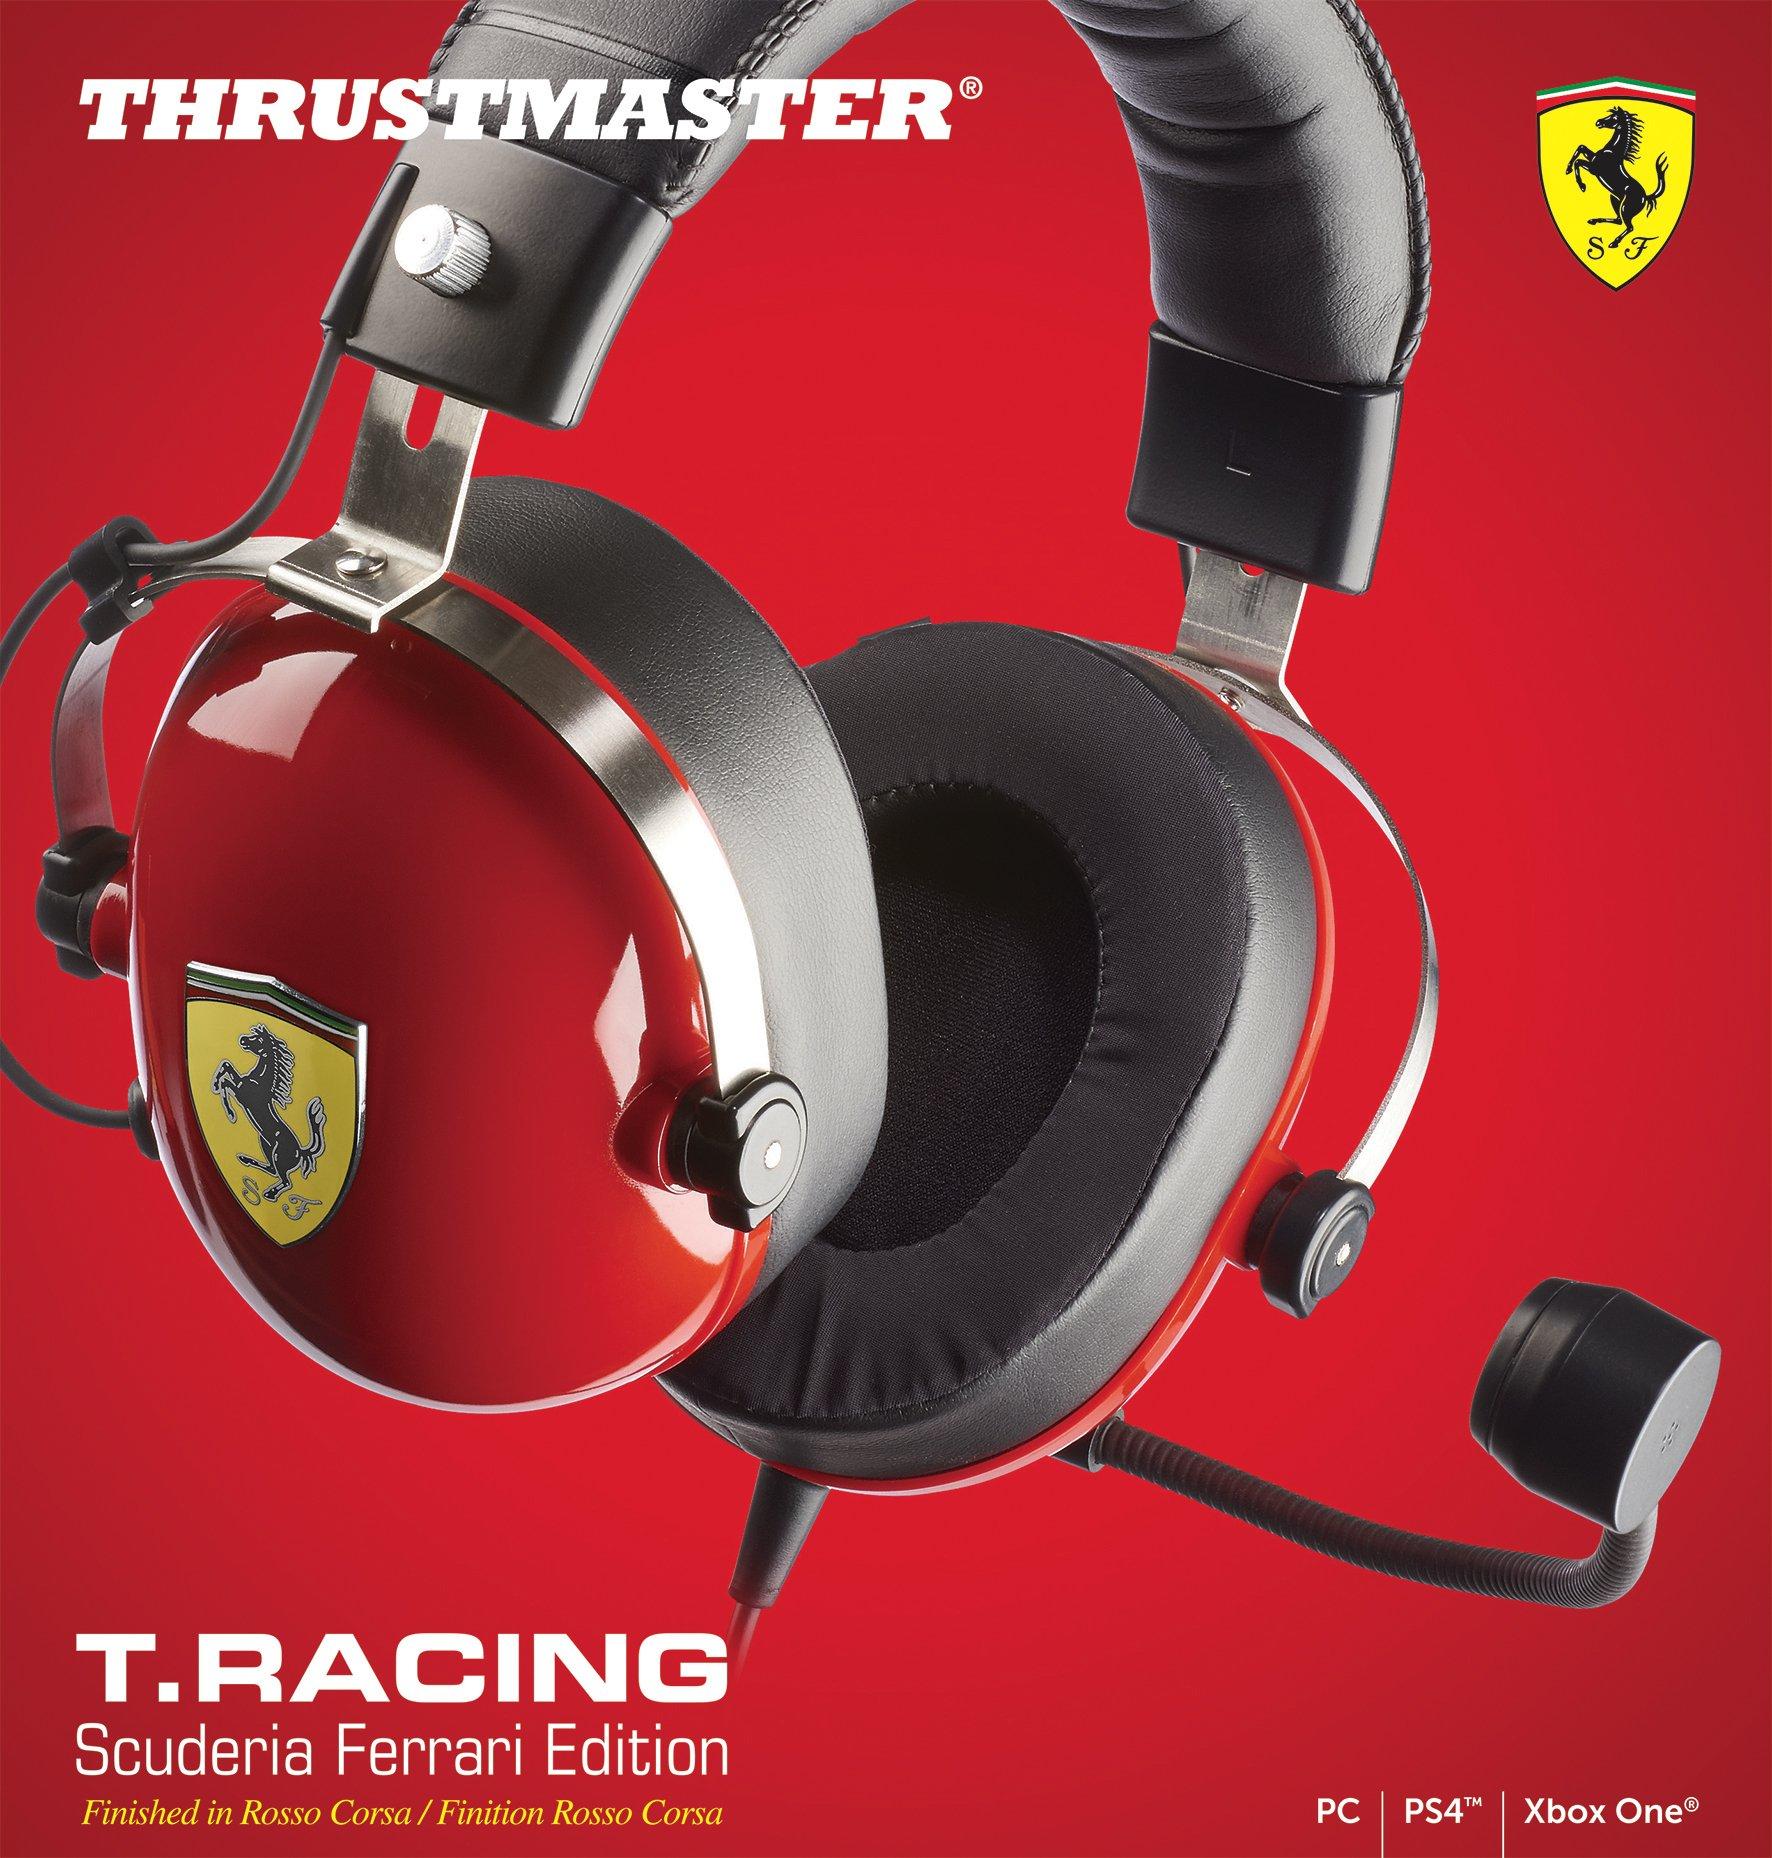 https://media.gamestop.com/i/gamestop/11152148_ALT10/Thrustmaster-T.Racing-Scuderia-Ferrari-Edition-Universal-Gaming-Headset?$pdp$